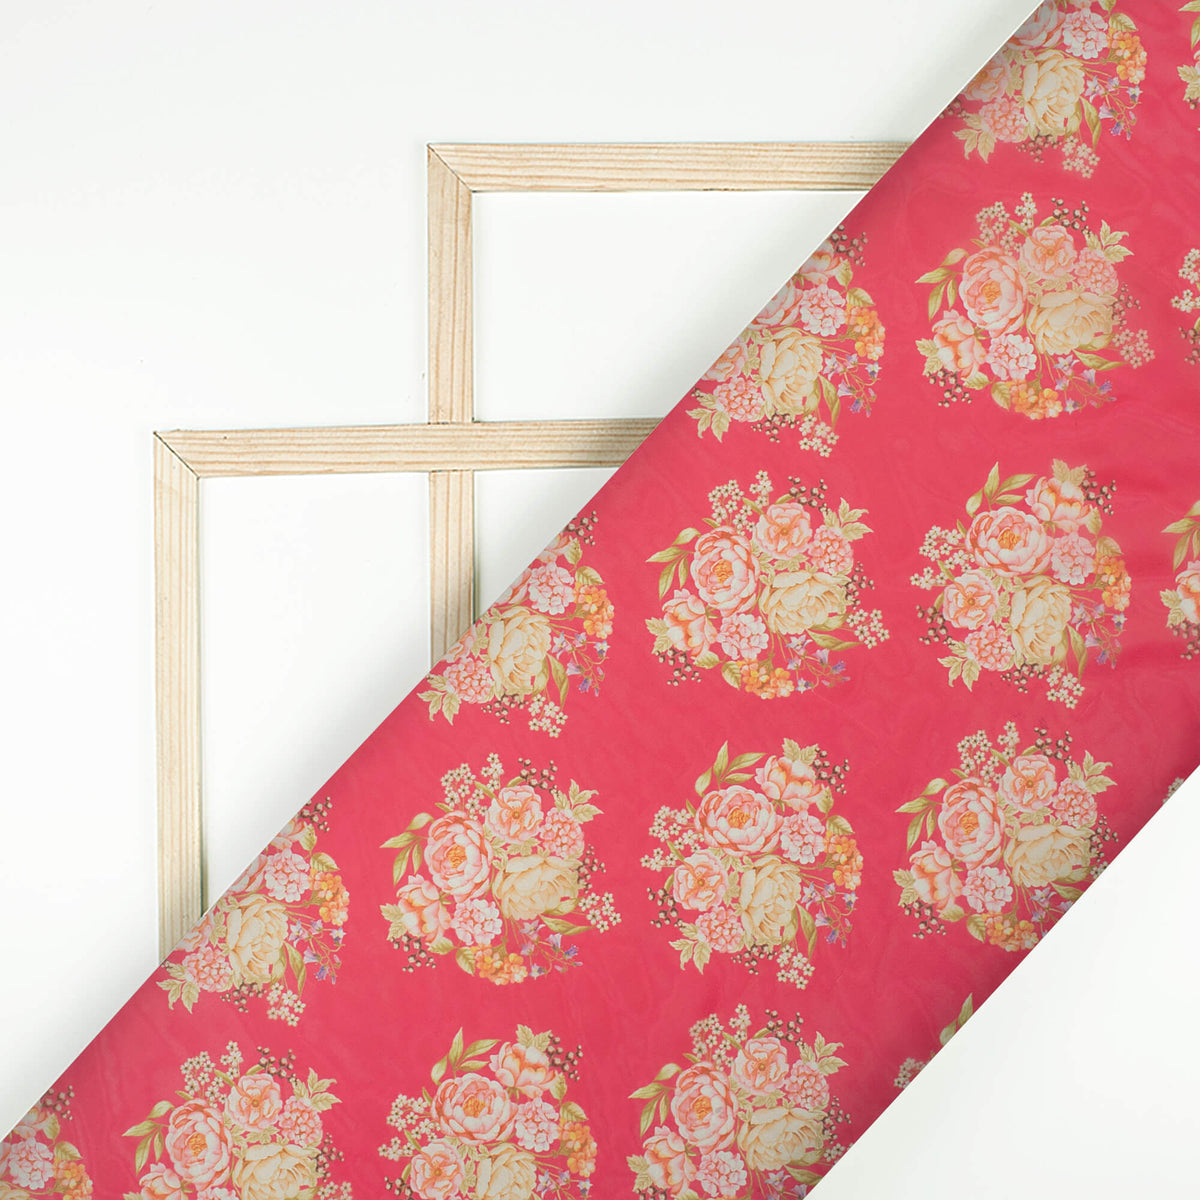 Vermilion Red And Peach Floral Pattern Digital Print Organza Satin Fabric